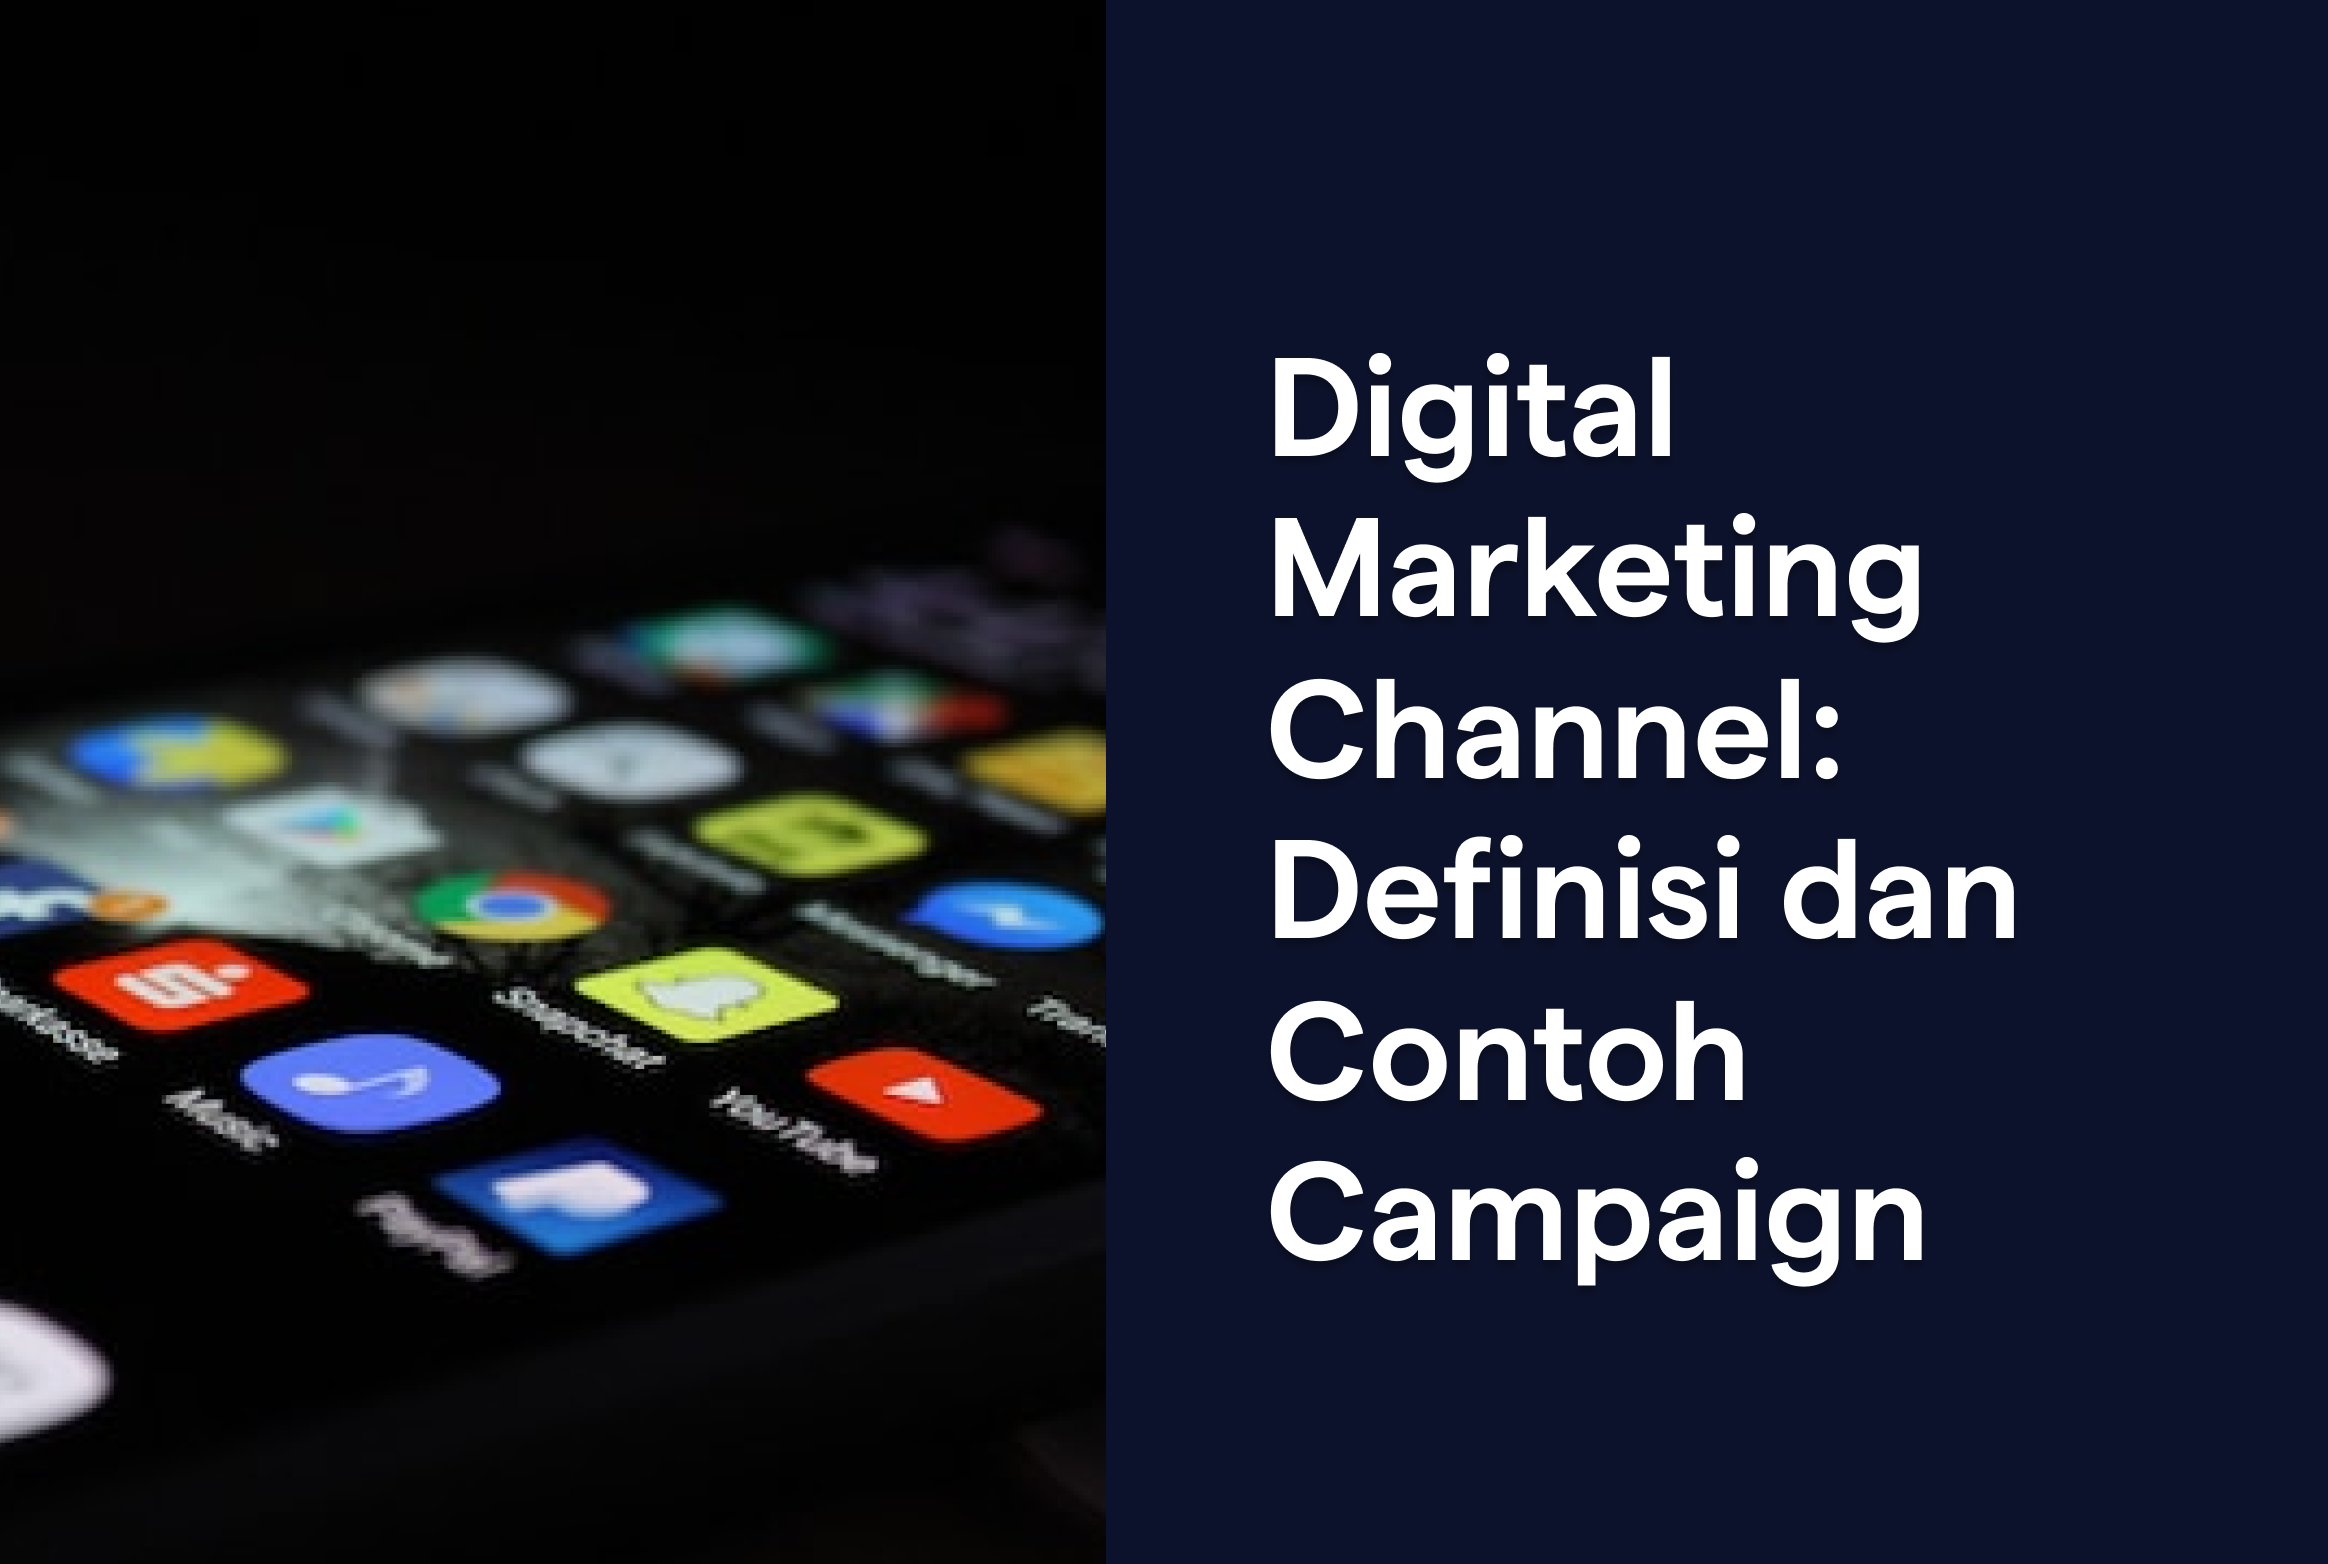 Digital Marketing Channel: Definisi dan Contoh